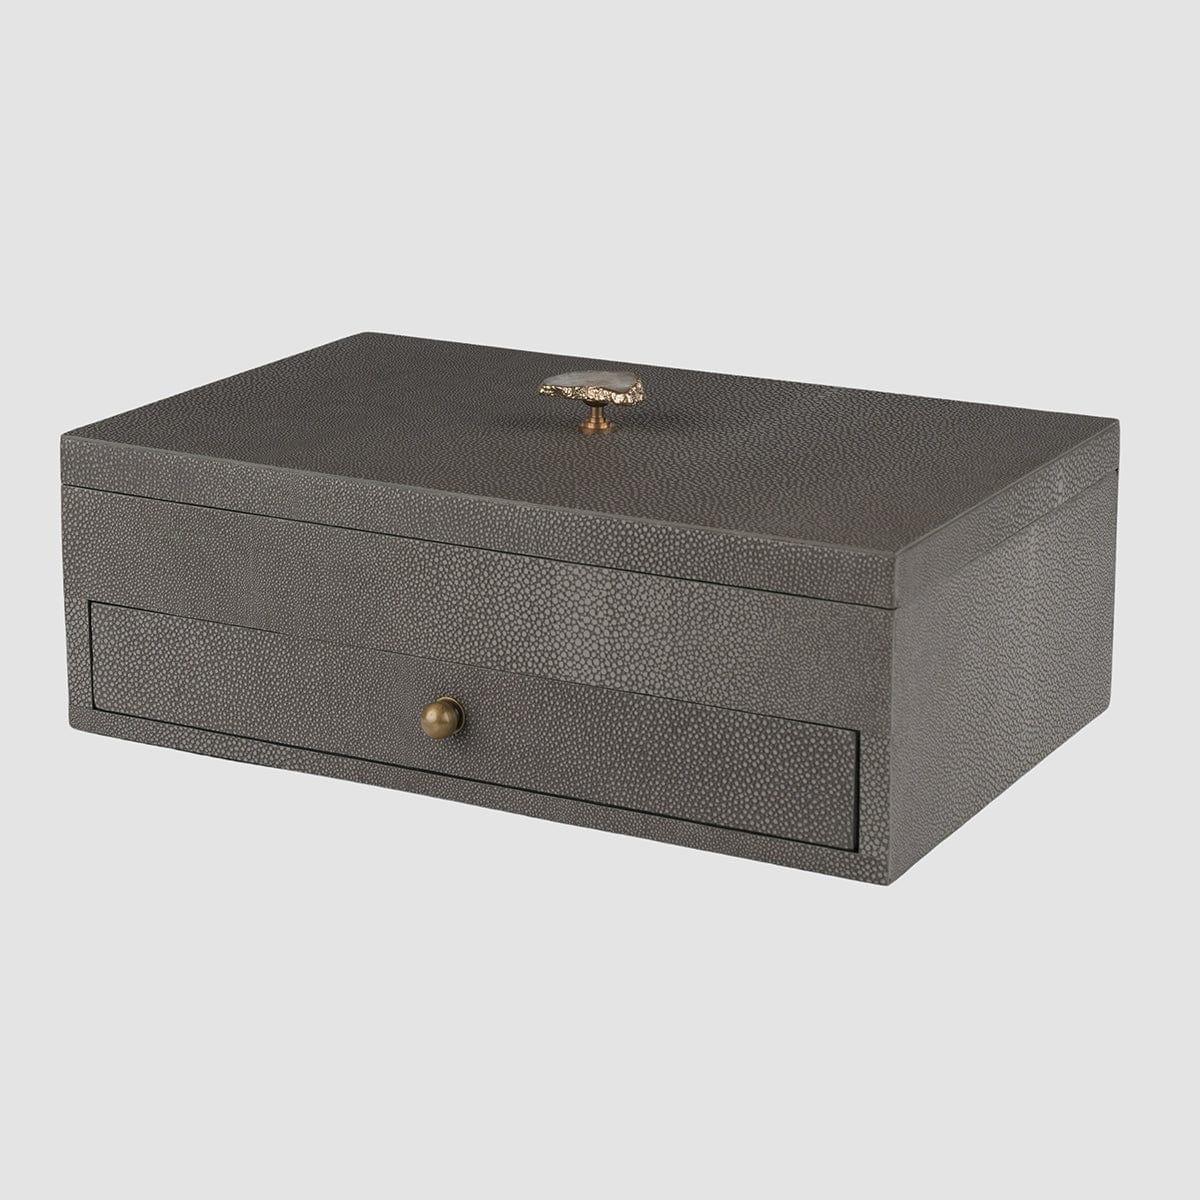 Eccotrading Design London Accessories Treasure Box Grey Shagreen Leather House of Isabella UK